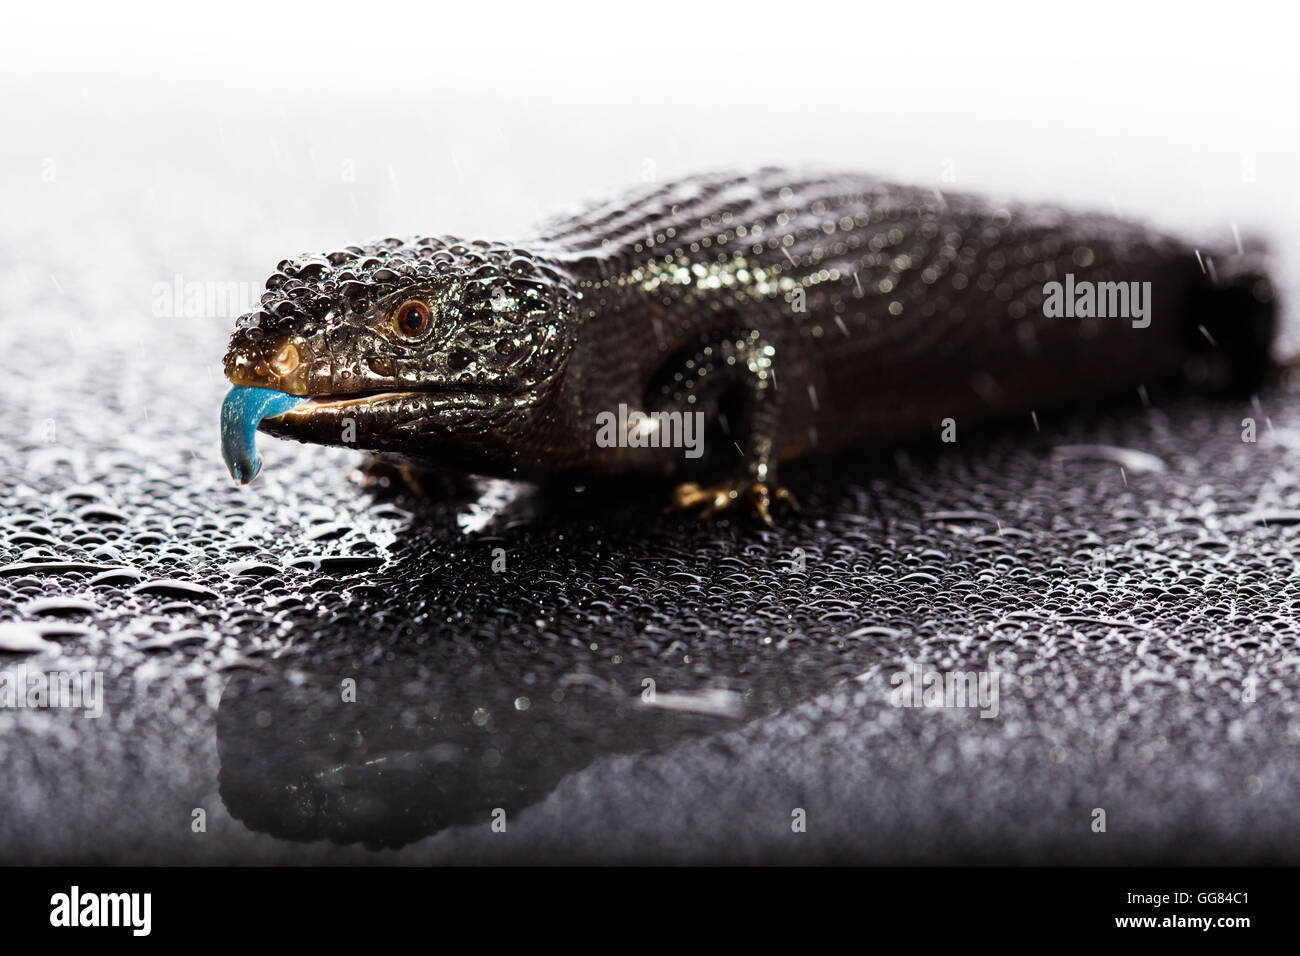 Black blue tongued lizard in wet dark shiny studio environement Stock Photo